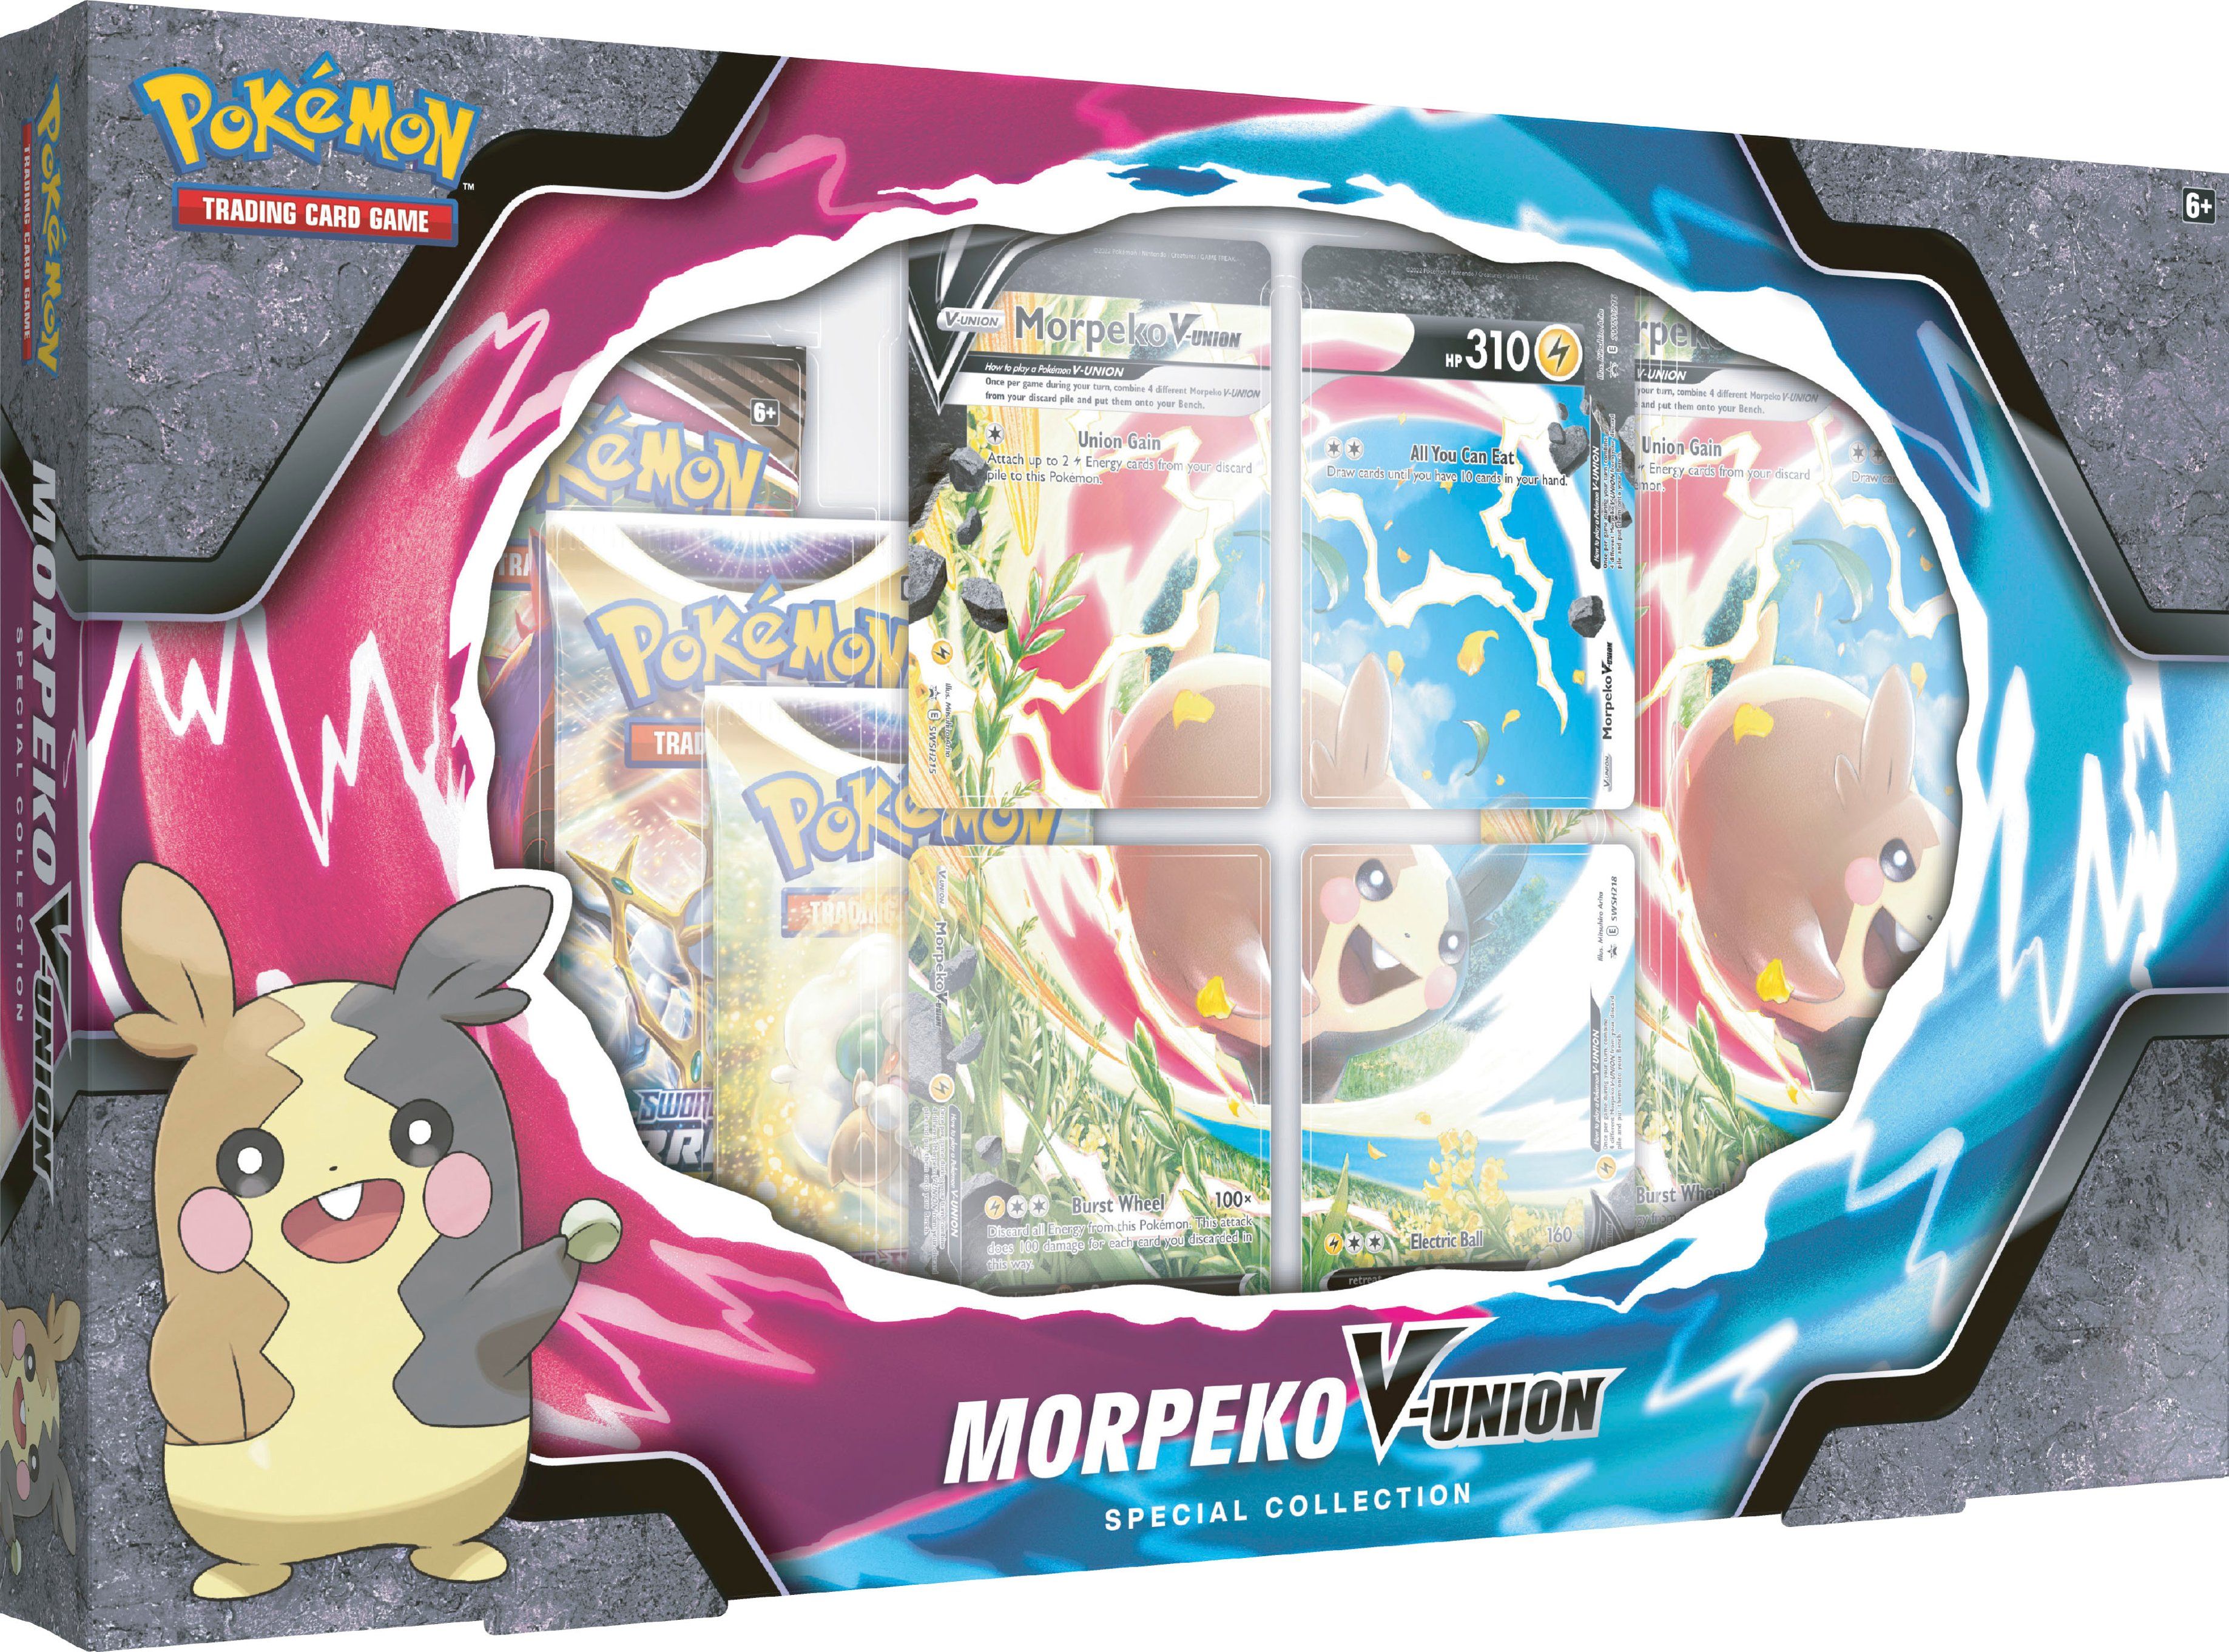 Pokémon Trading Card Game: Morpeko V-Union Special Collection 290-87019 - Best Buy | Best Buy U.S.